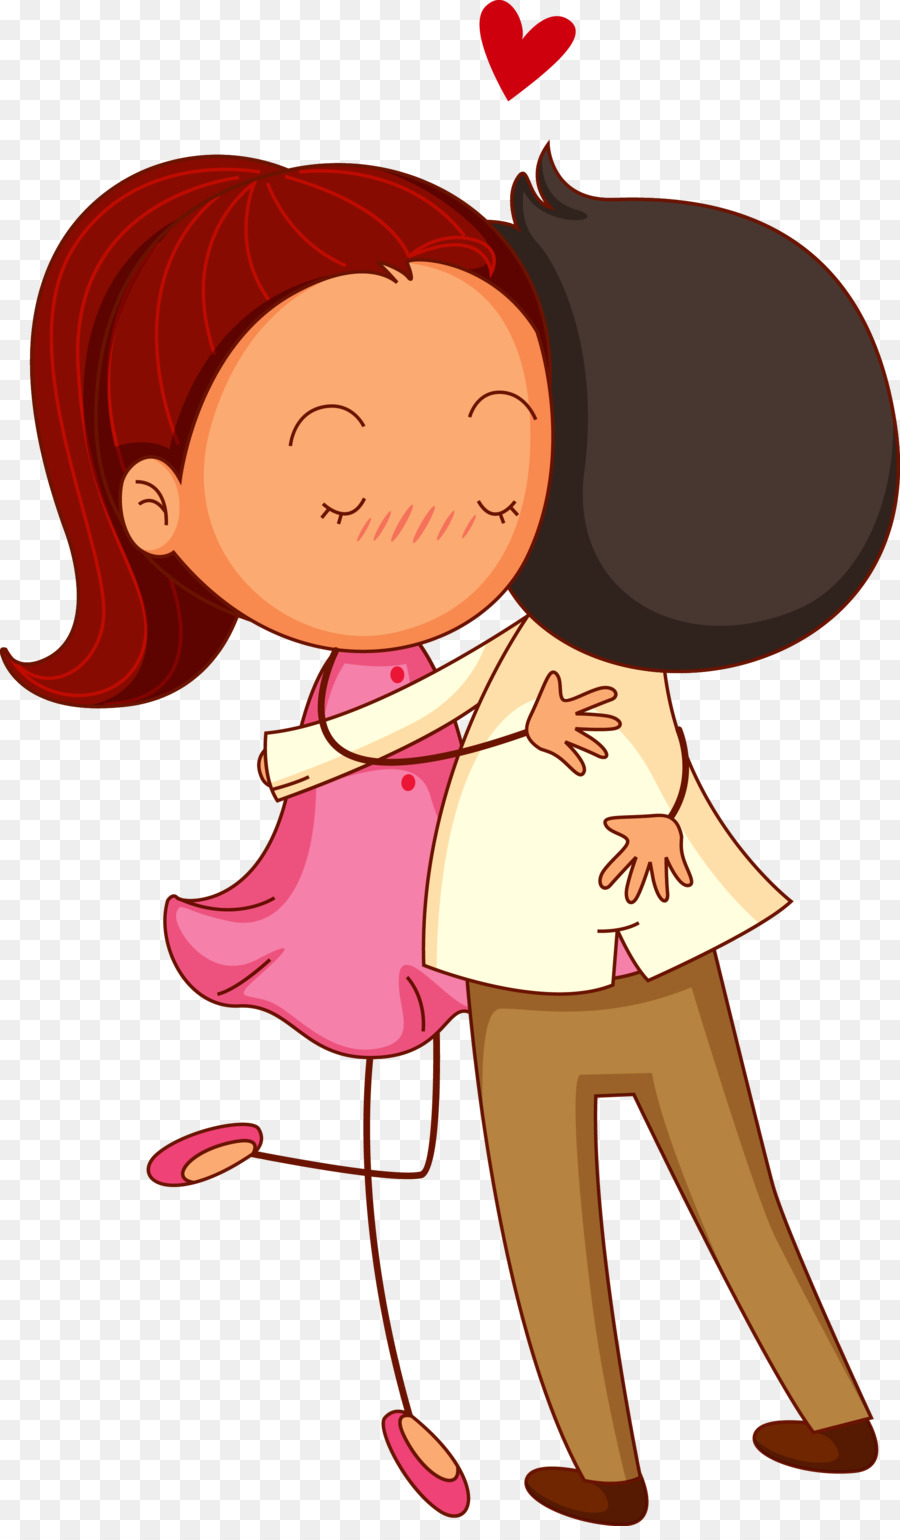 Hug Cartoon Drawing Illustration Couple hugging png download 2244*